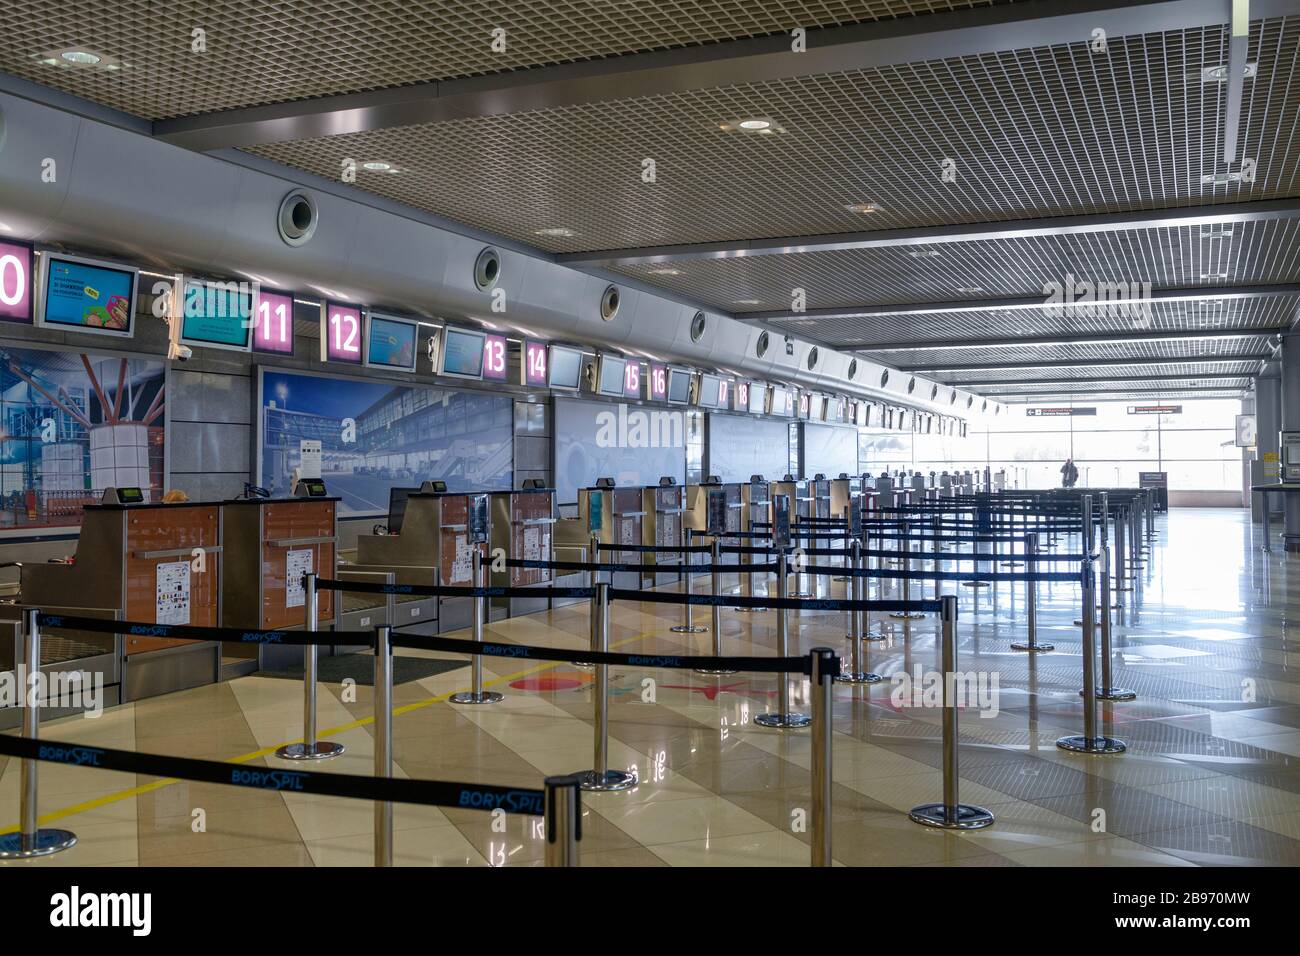 Boryspil airport, Ukraine, March 22 2020, empty airport during covid-19 coronavirus outbreak. Stock Photo